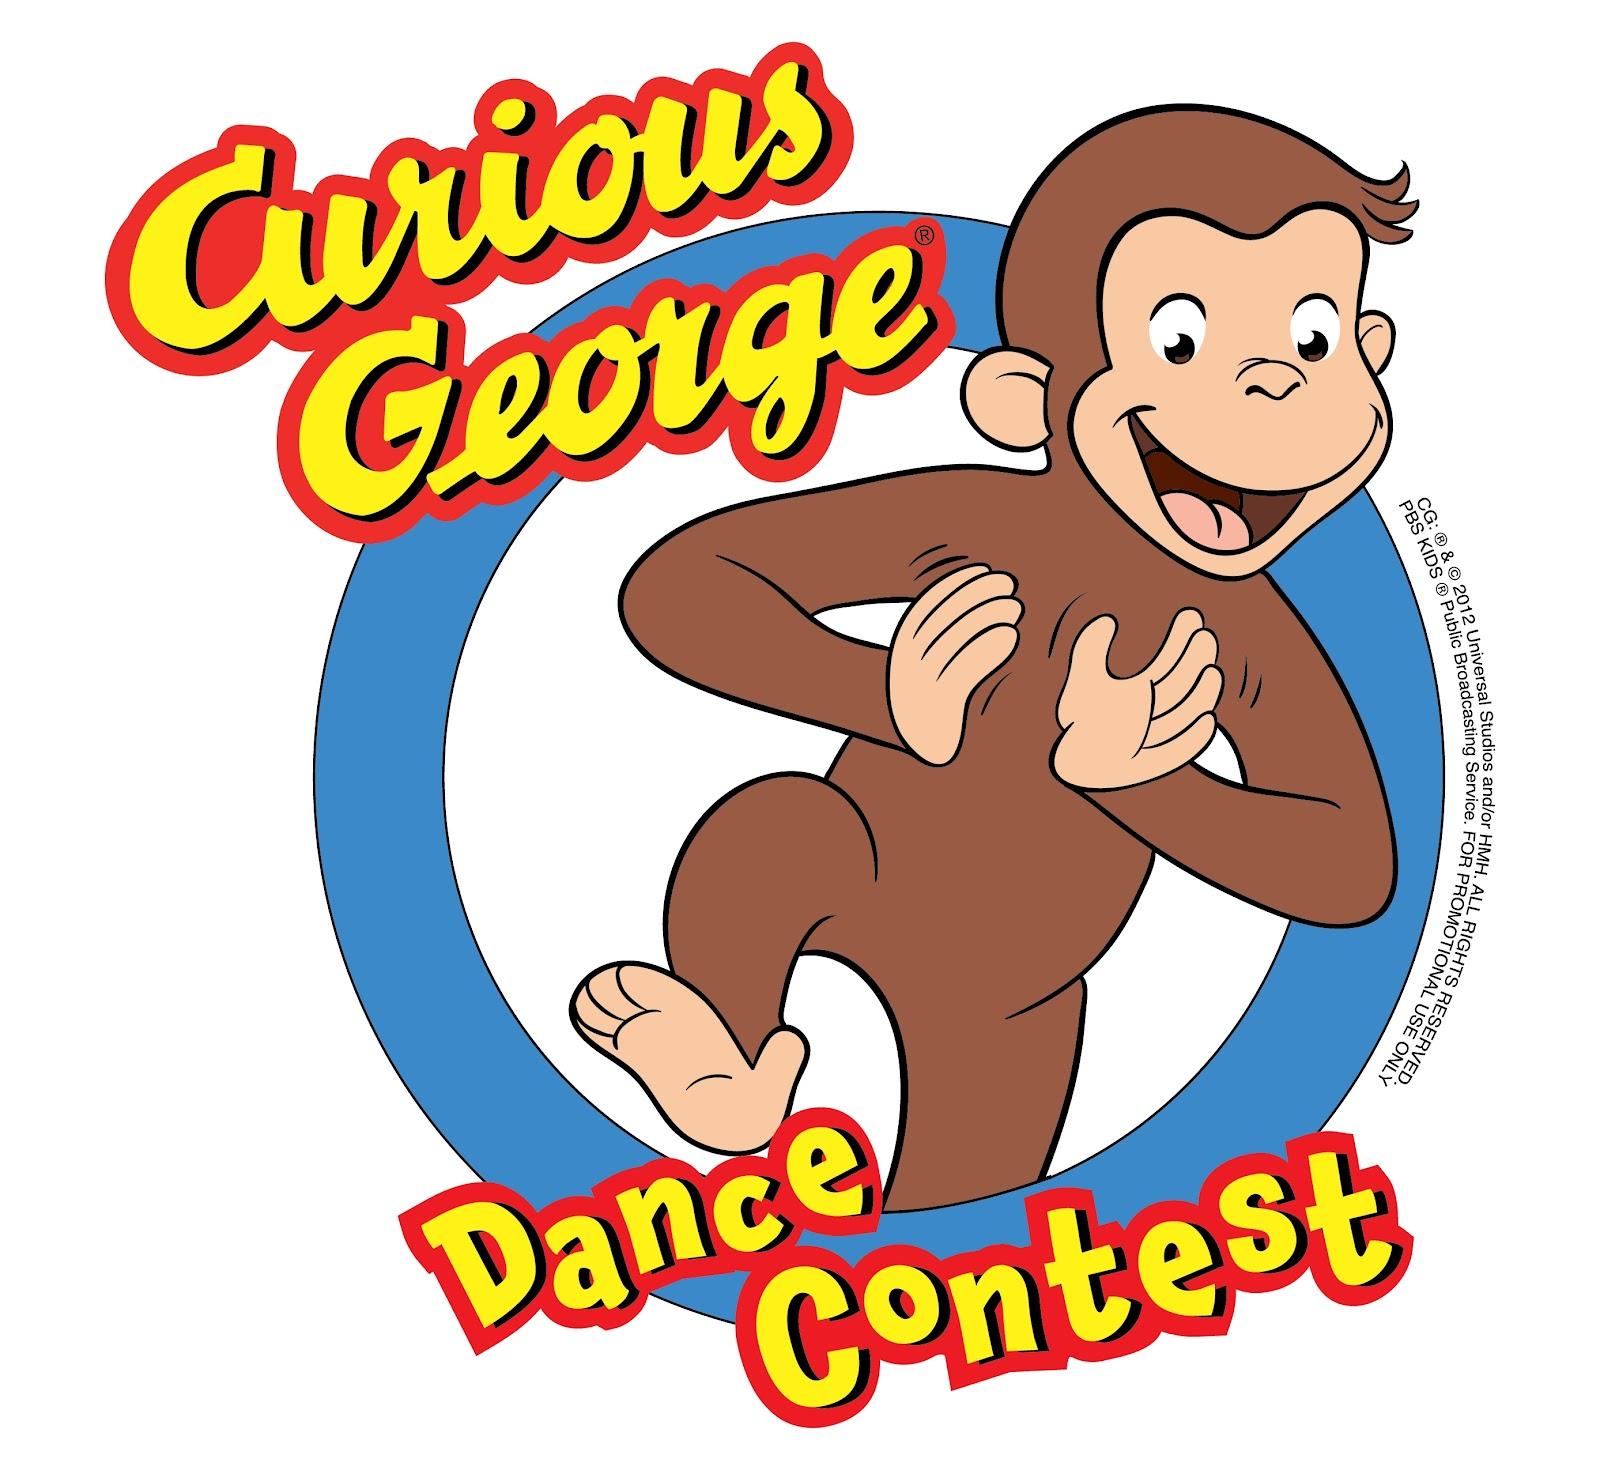 Look It's Megryansmom: Curious George Dance Contest